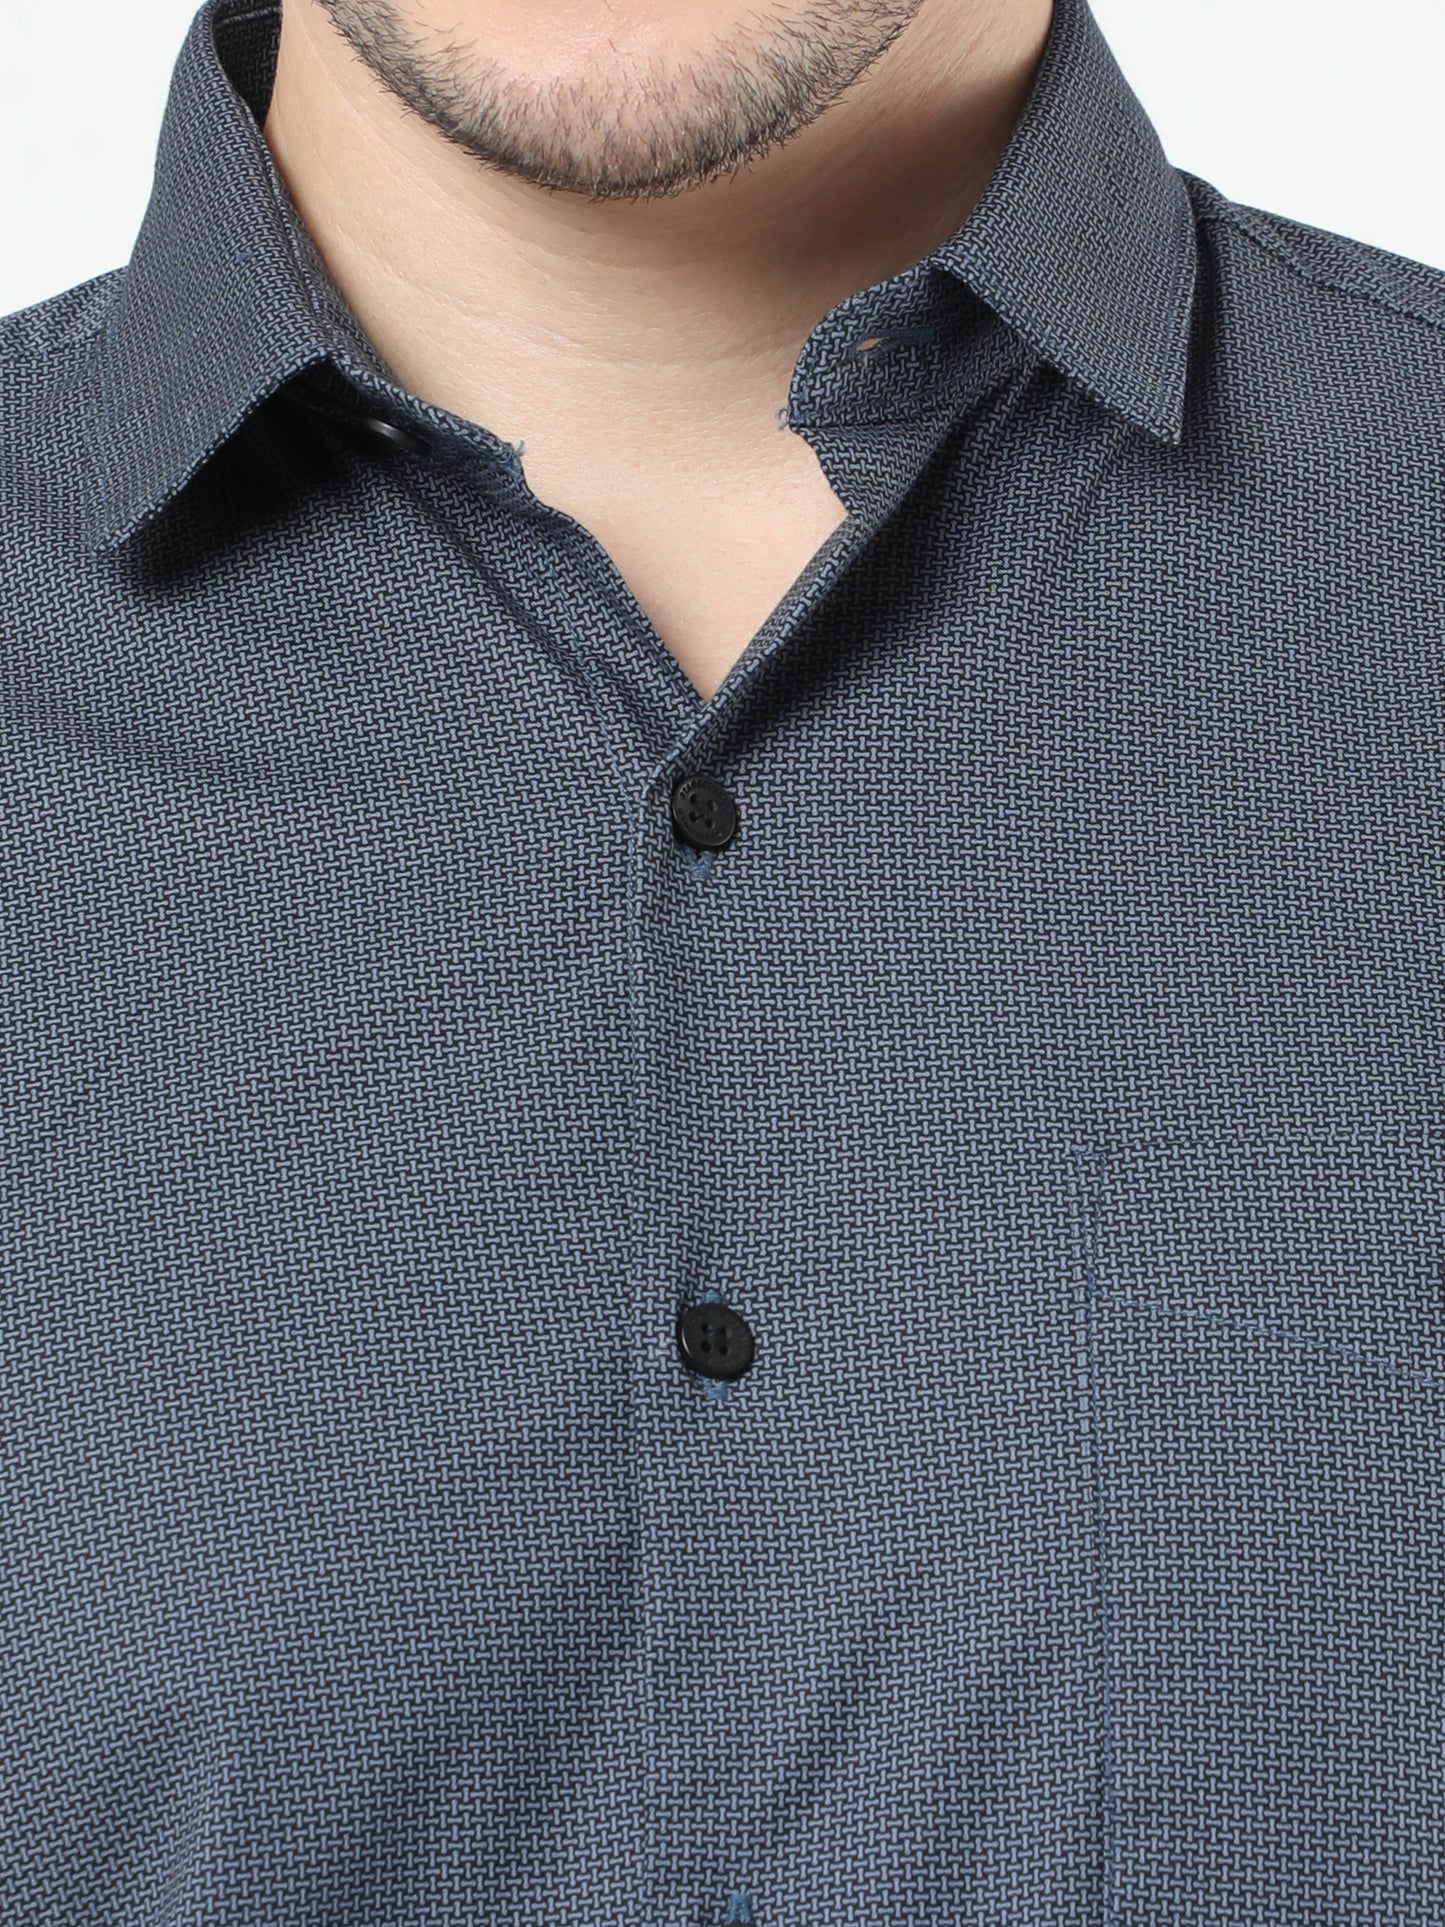 Dark Grey Printed Full Sleeves Shirt